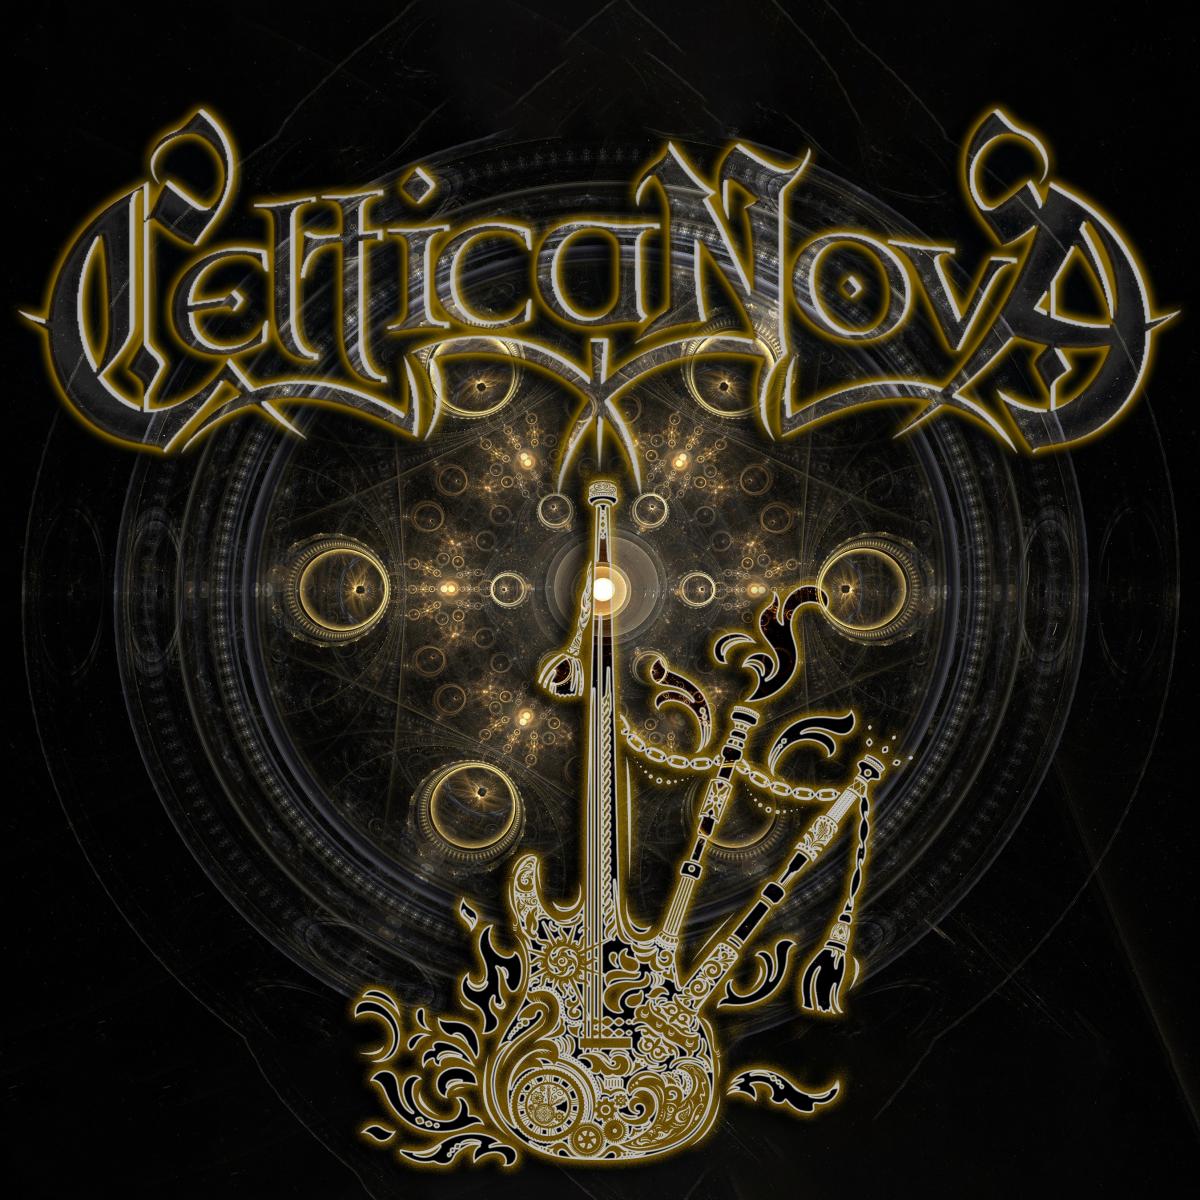 Celtica Nova logo.jpg